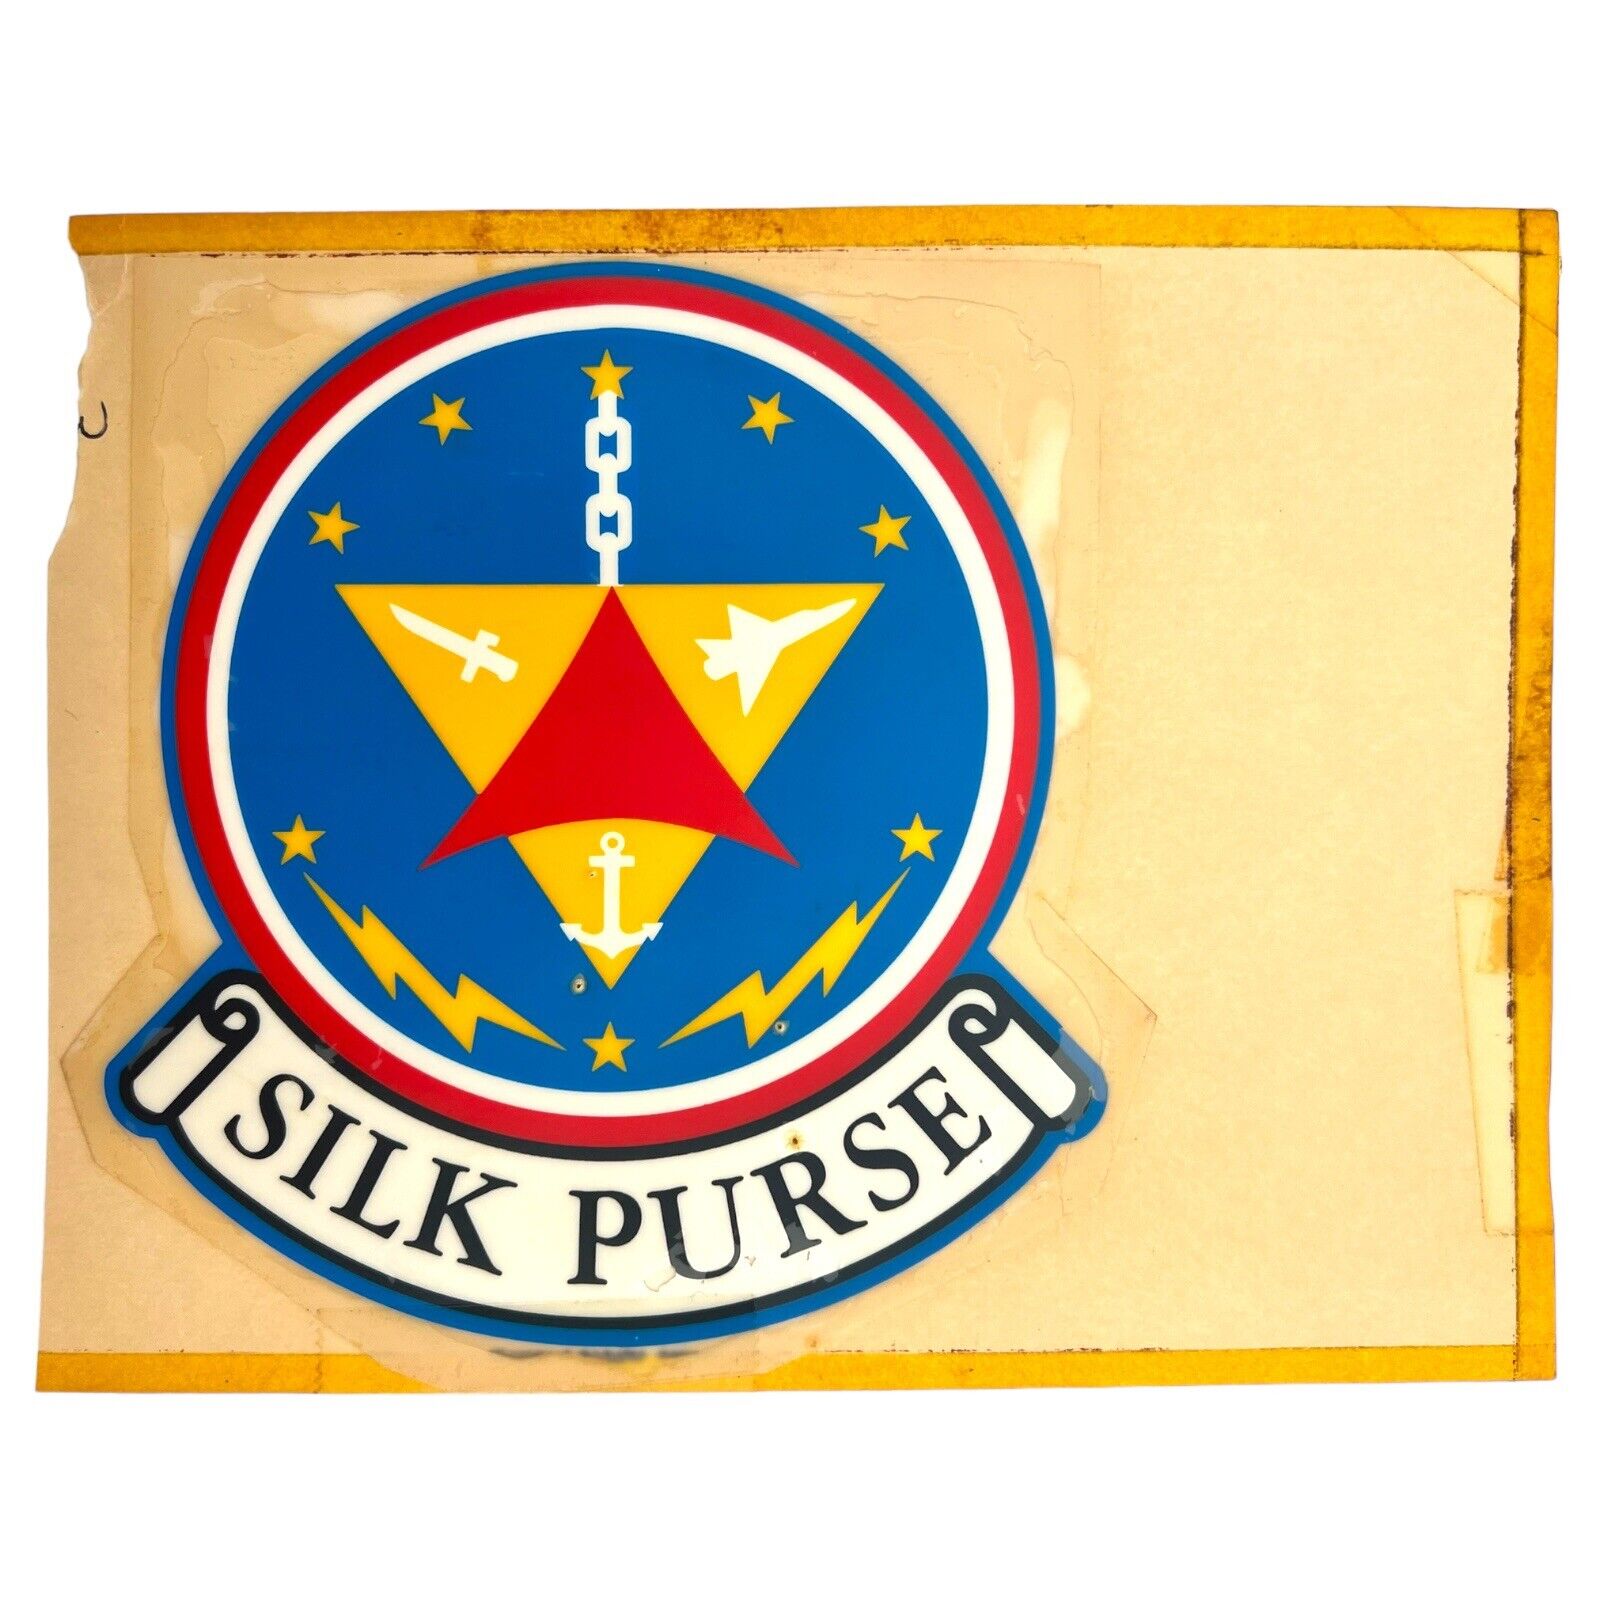 VTG 1970s US Air Force Operation Silk Purse Emblem Sticker on Cardstock Military